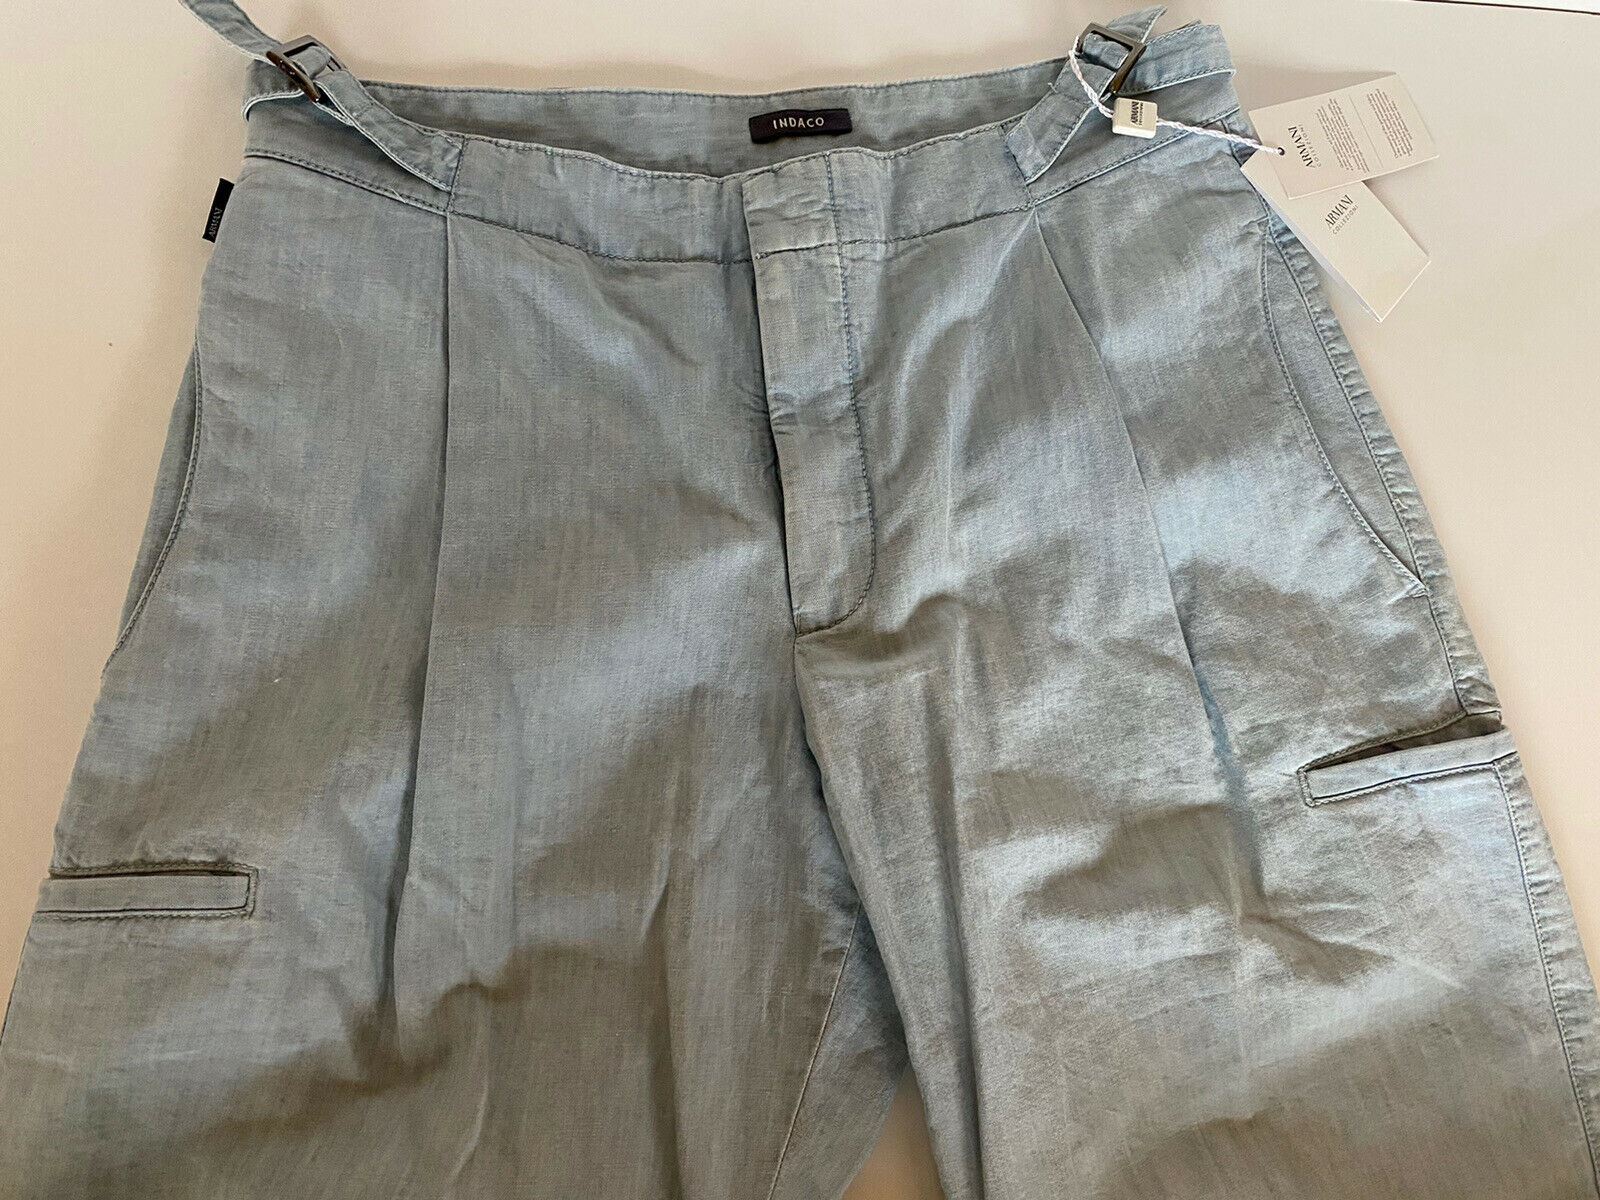 NWT $495 Armani Collezioni Men's Light Blue Shorts Size 30 US (46 Eu) TCP82S